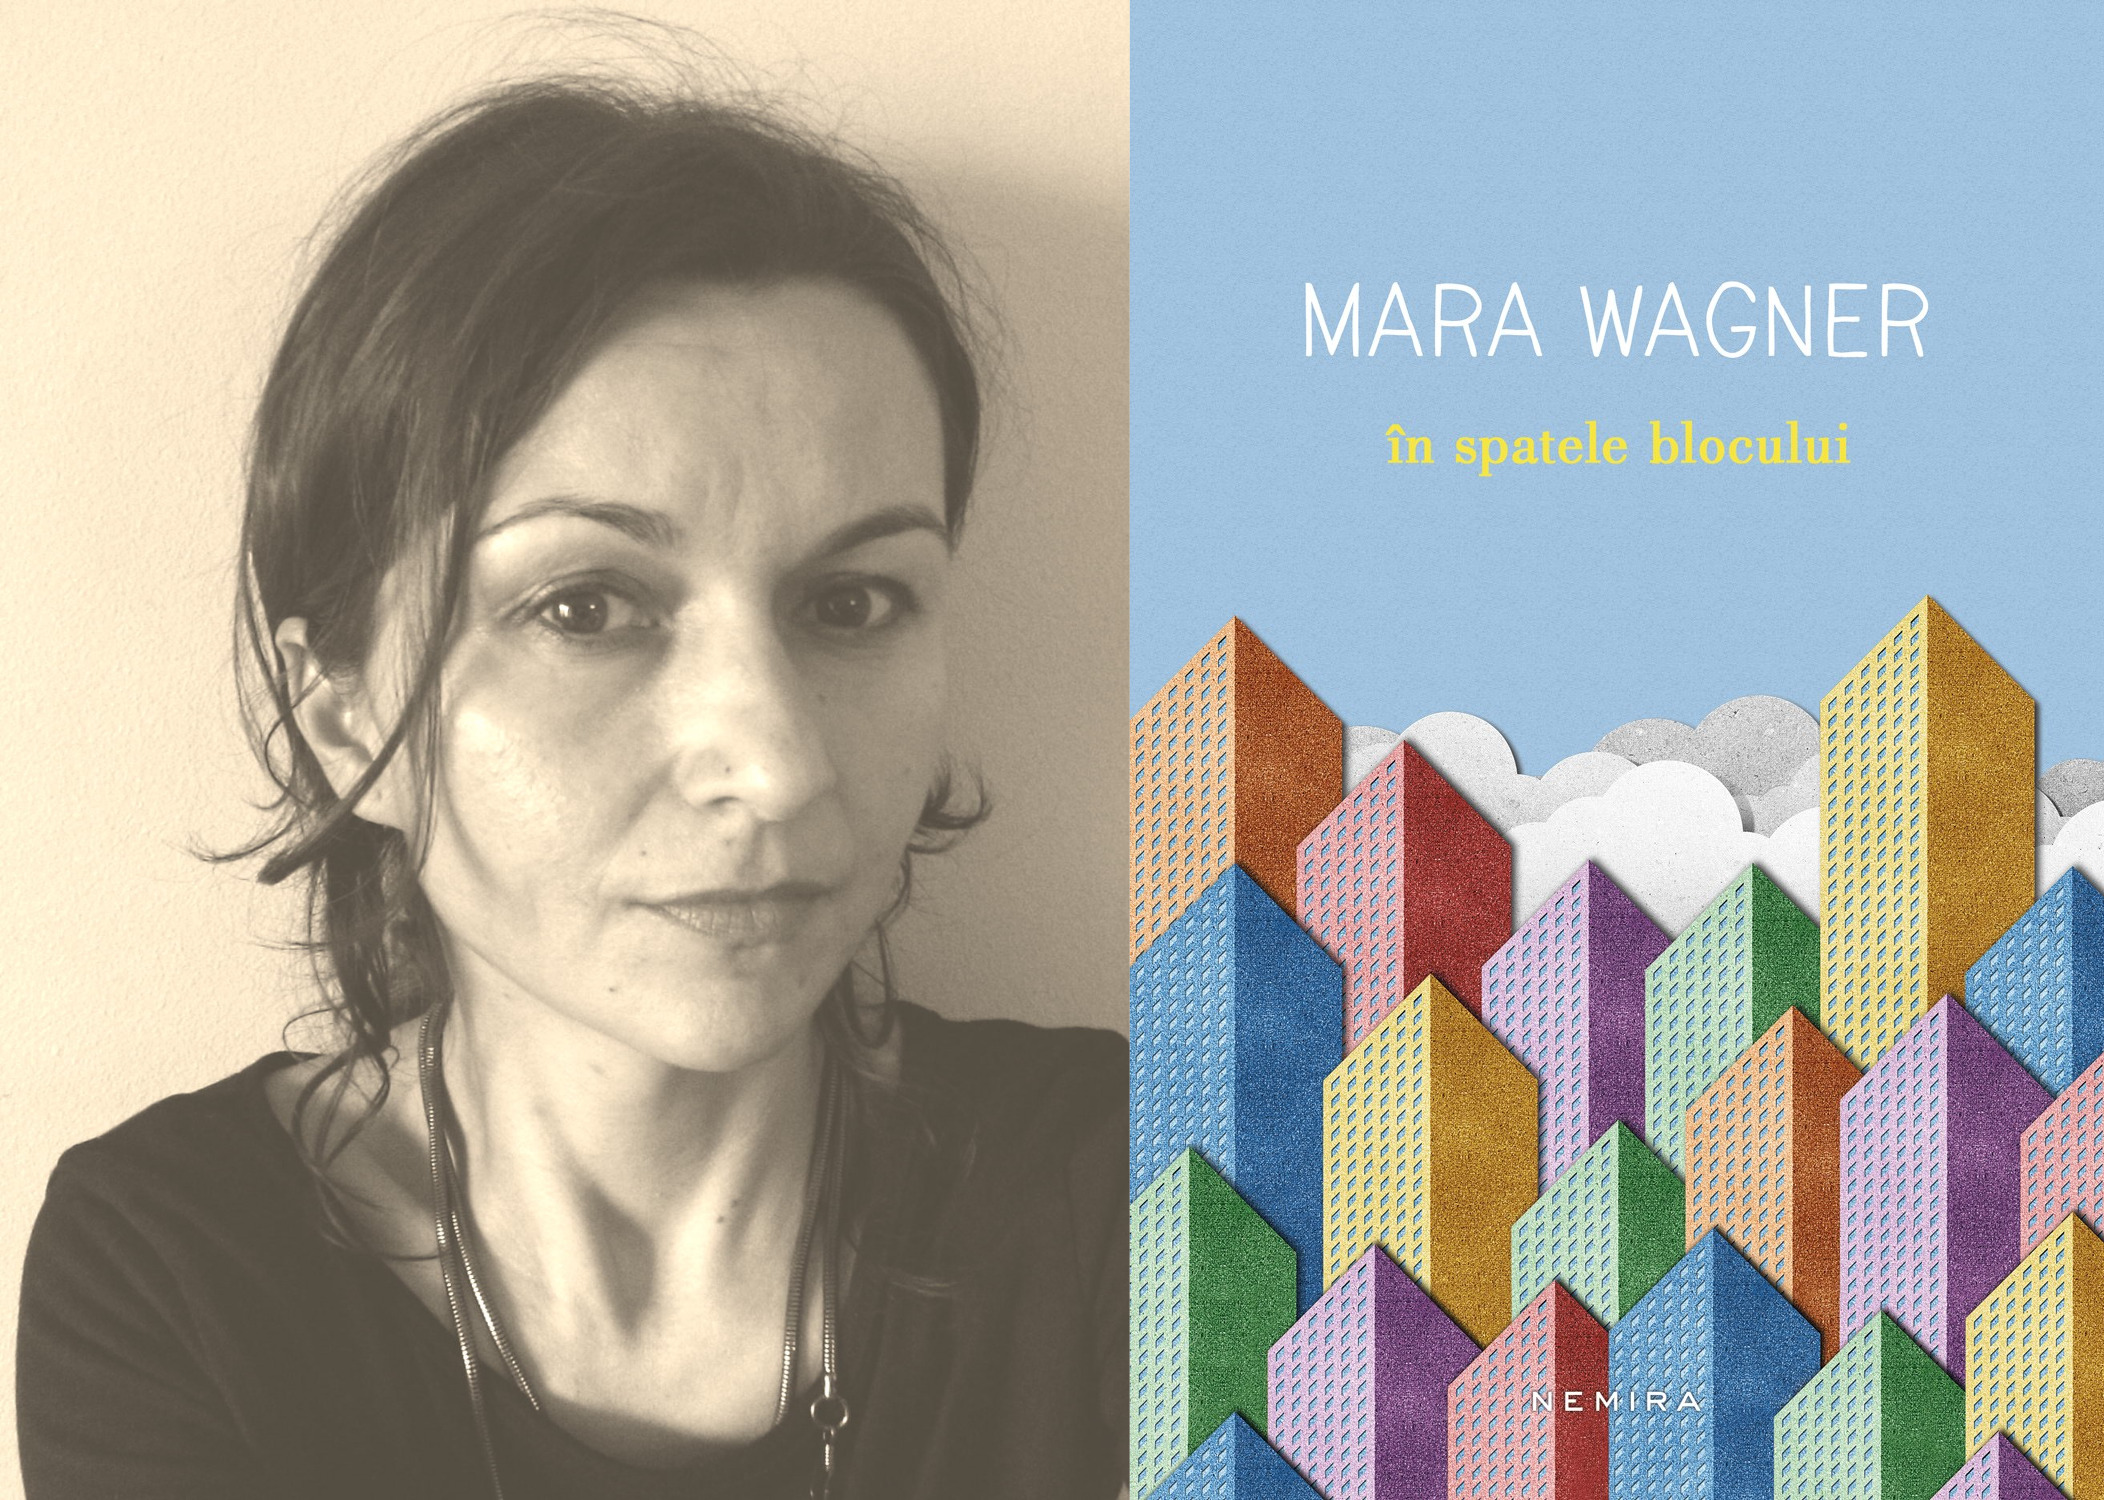 Mara Wagner